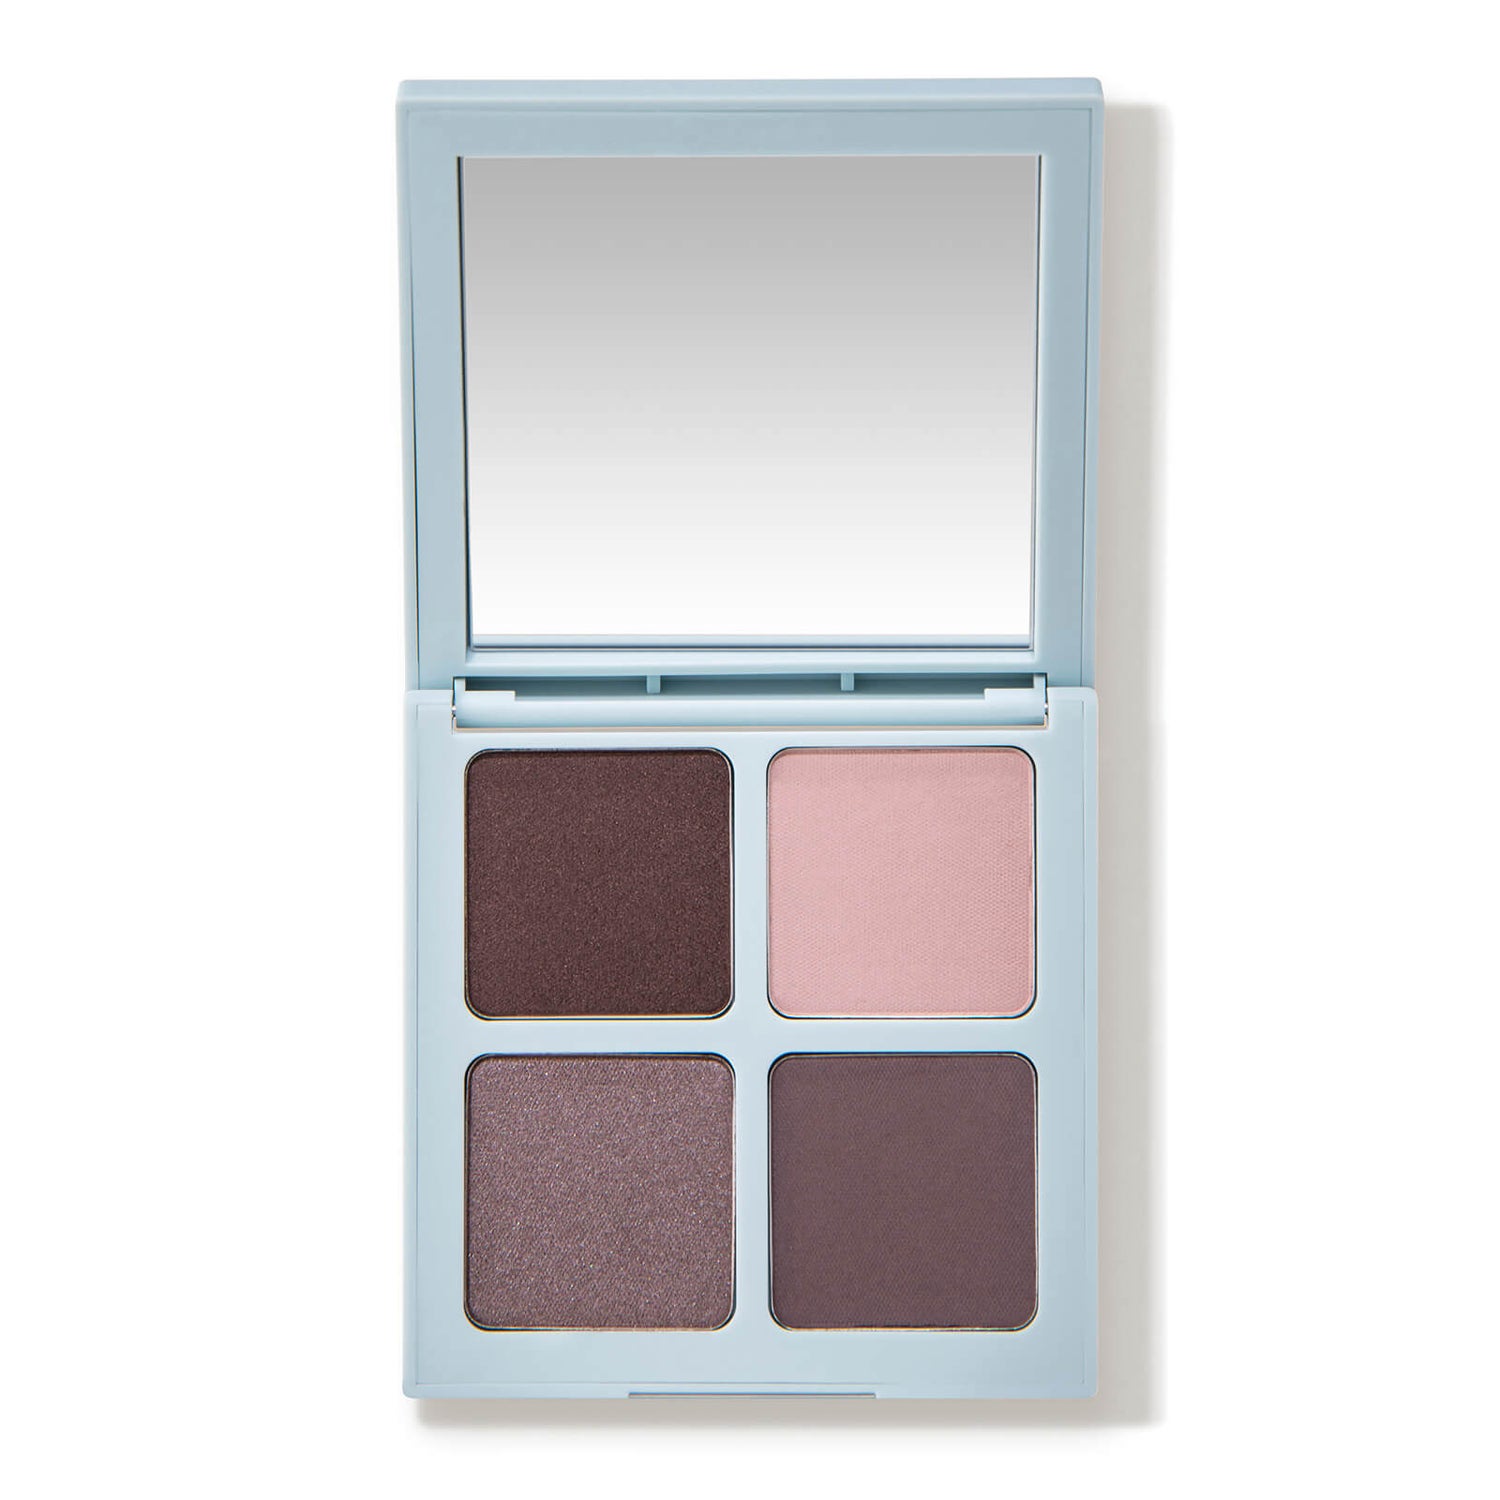 Vapour Beauty Eyeshadow Quad (0.23 oz.)